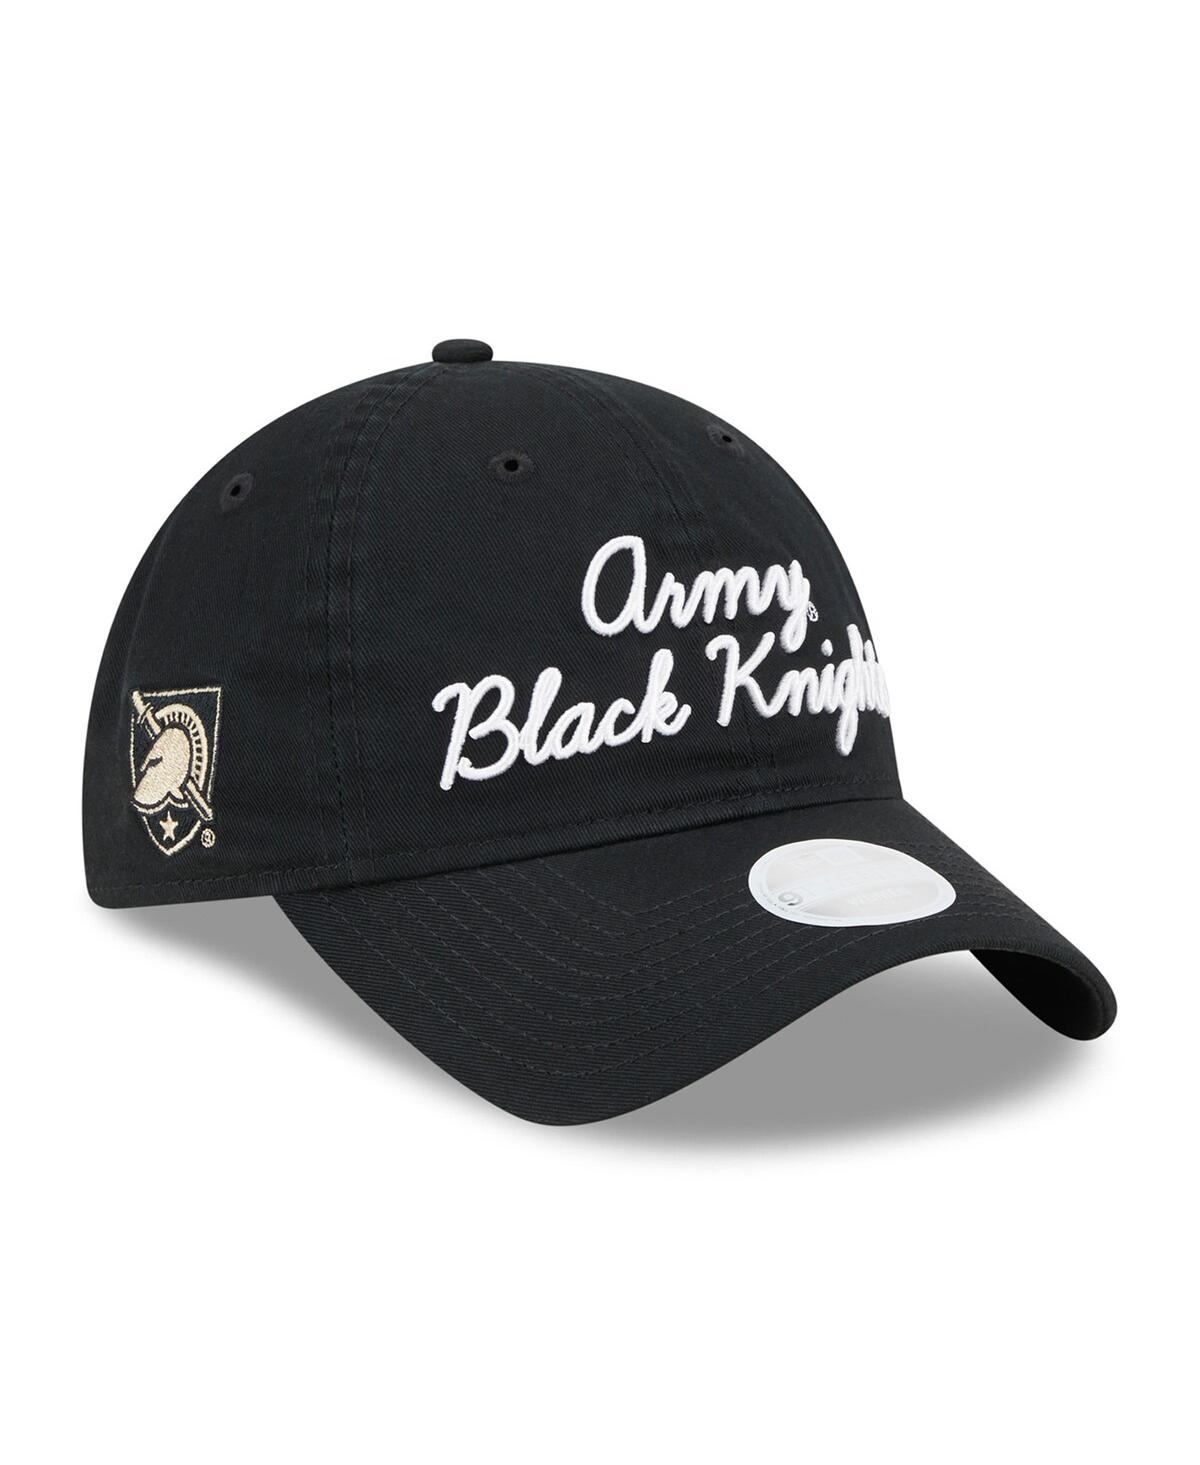 New Era Women's  Black Army Black Knights Script 9twenty Adjustable Hat